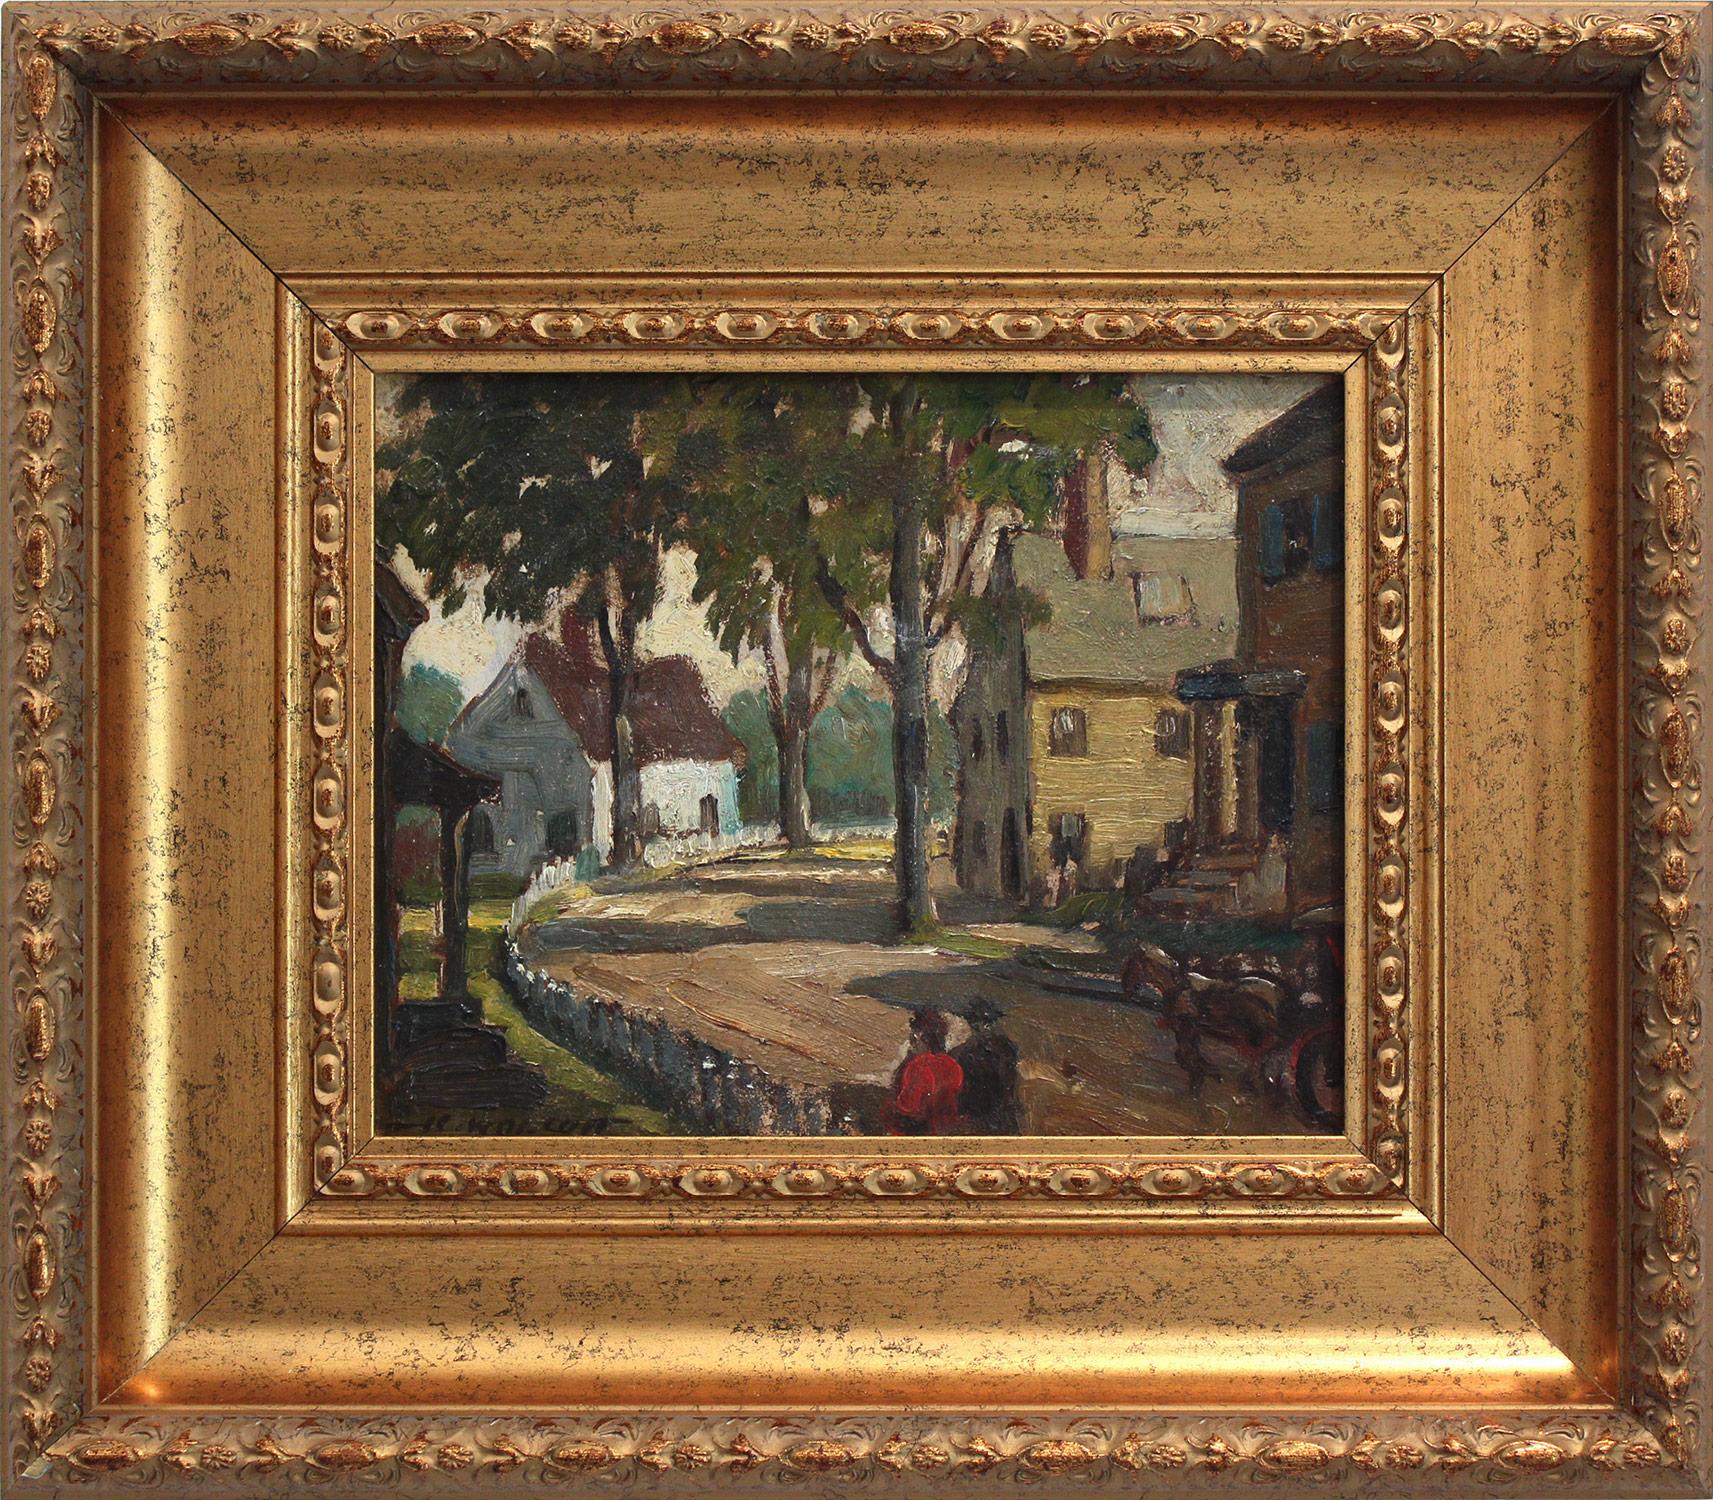 Harold C. Wolcott Landscape Painting - "Village in Paris, France" Impressionist Landscape Scene Oil Painting on Board